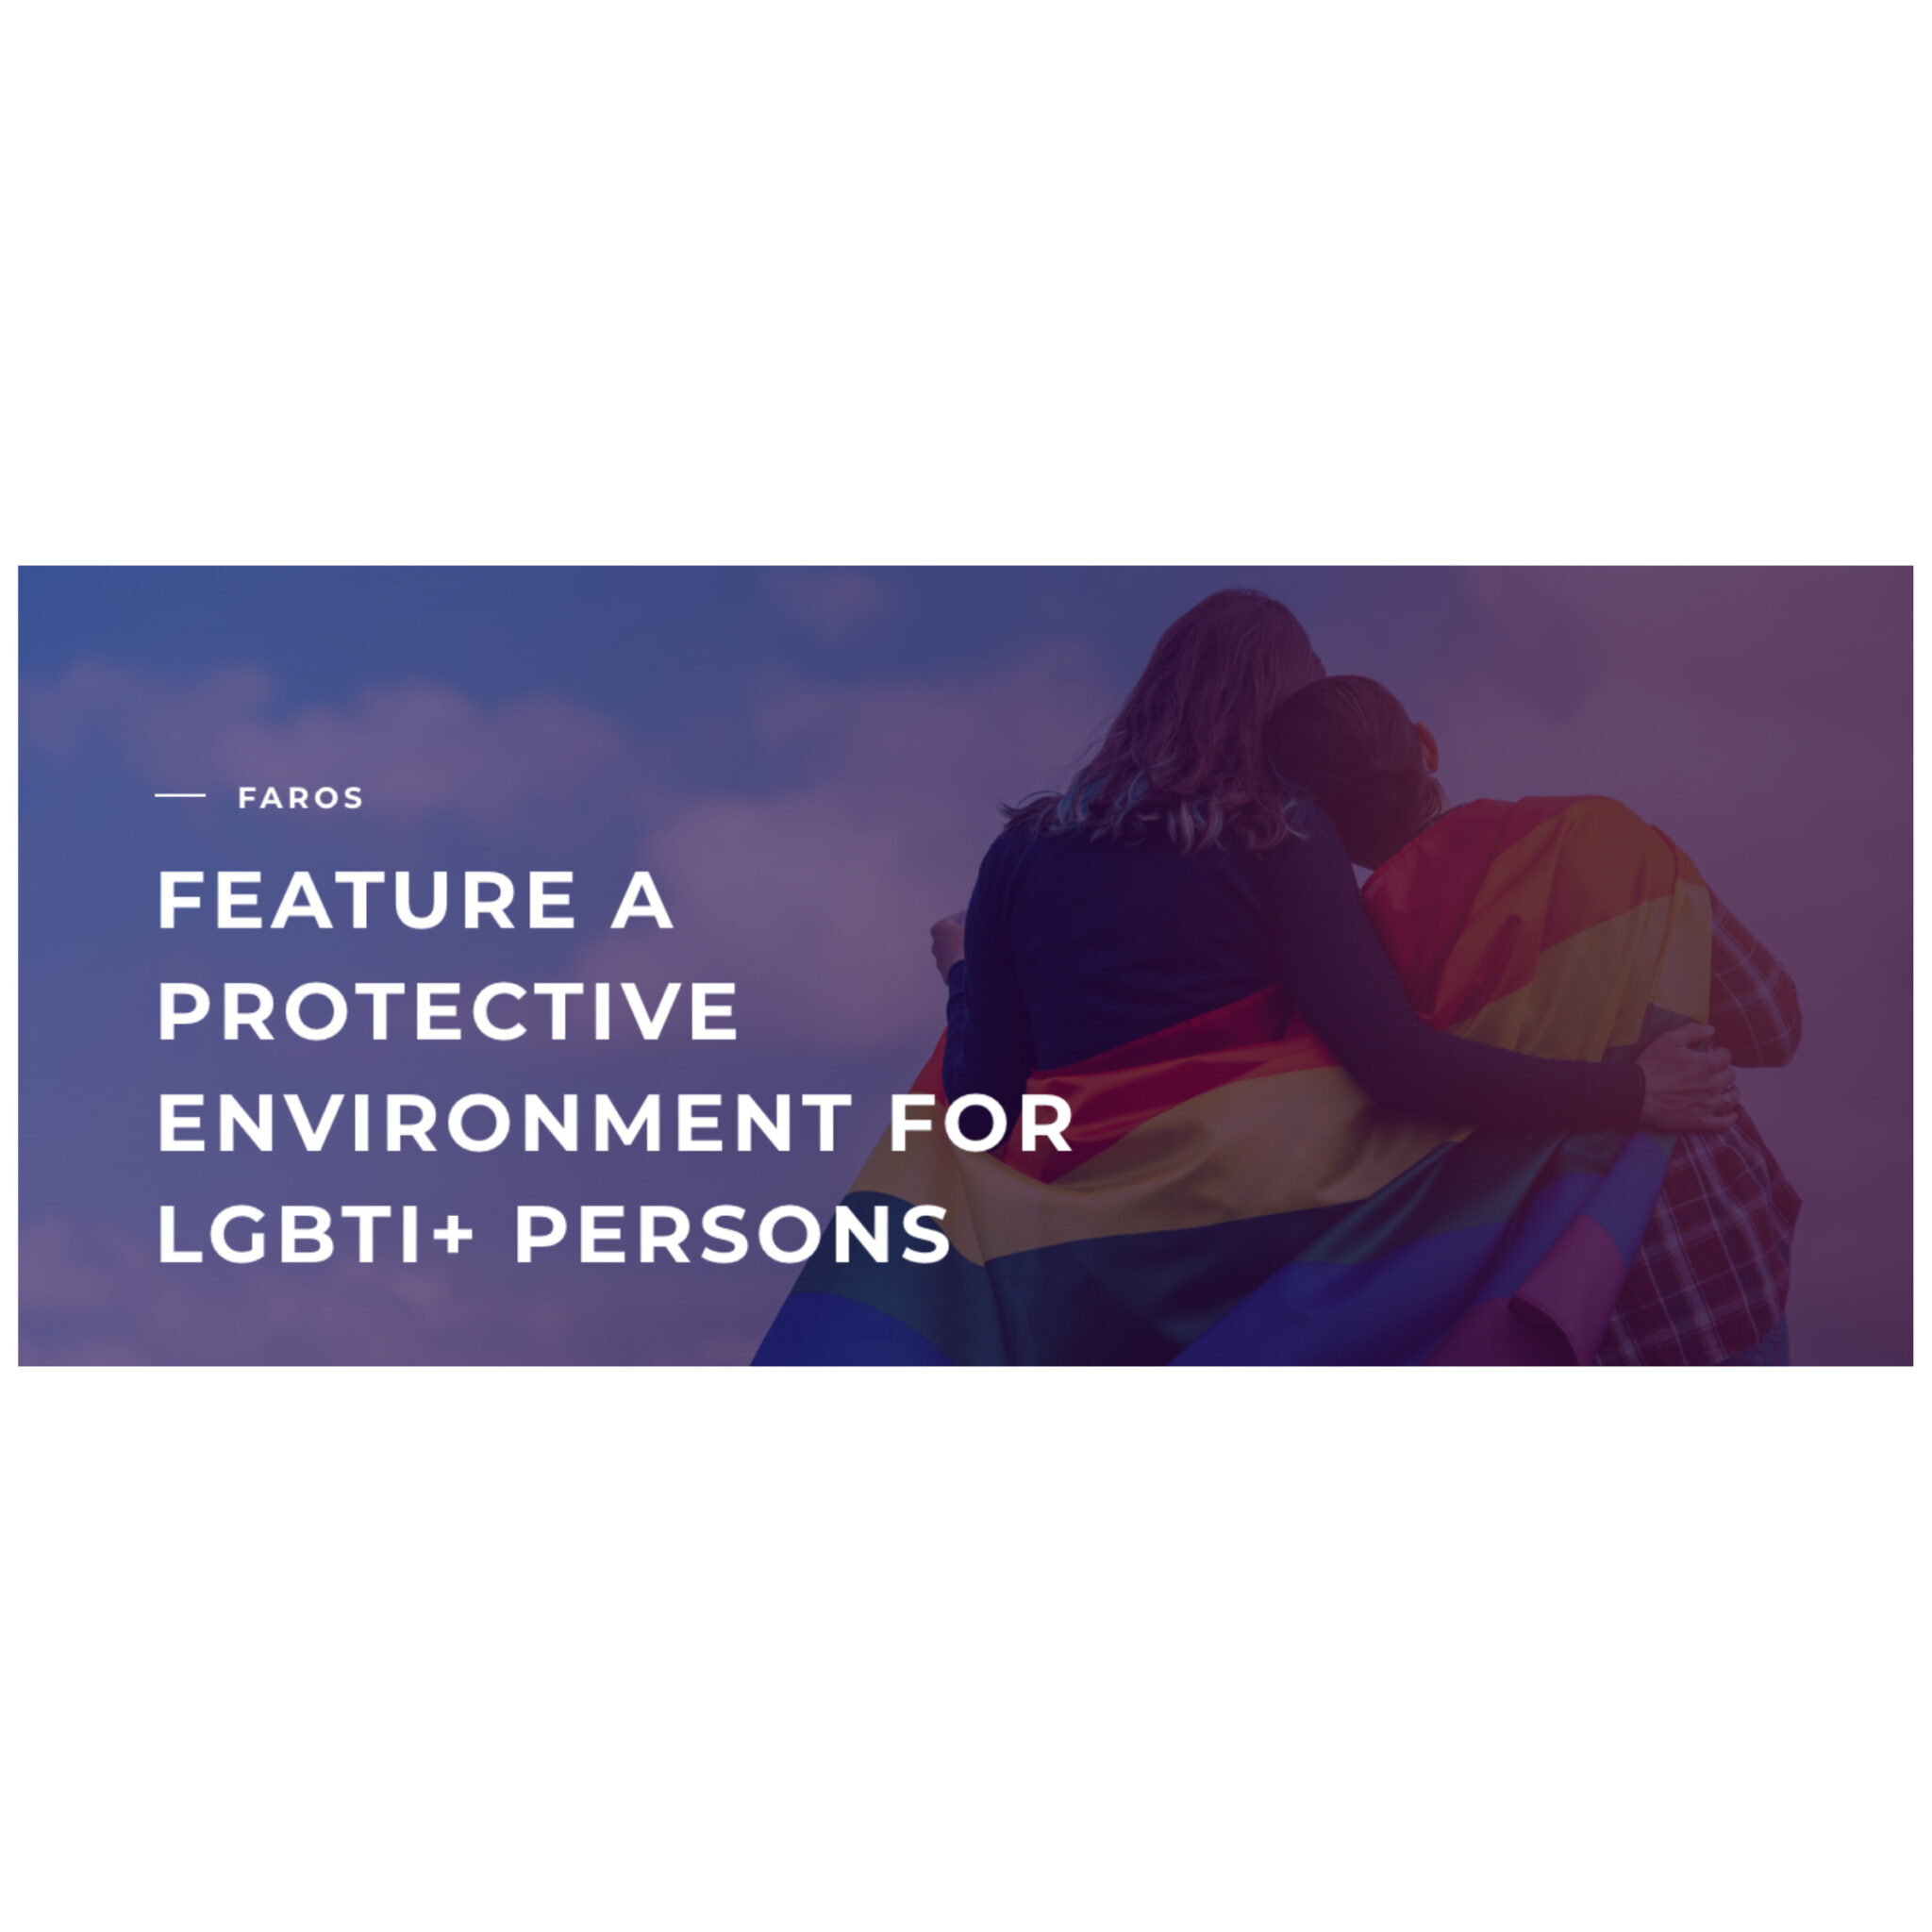 Featured image for “ΛΟΑΤΚΙ+ πρόσβαση στην υγεία: σεμινάριο στα πλαίσια του προγράμματος FAROS”